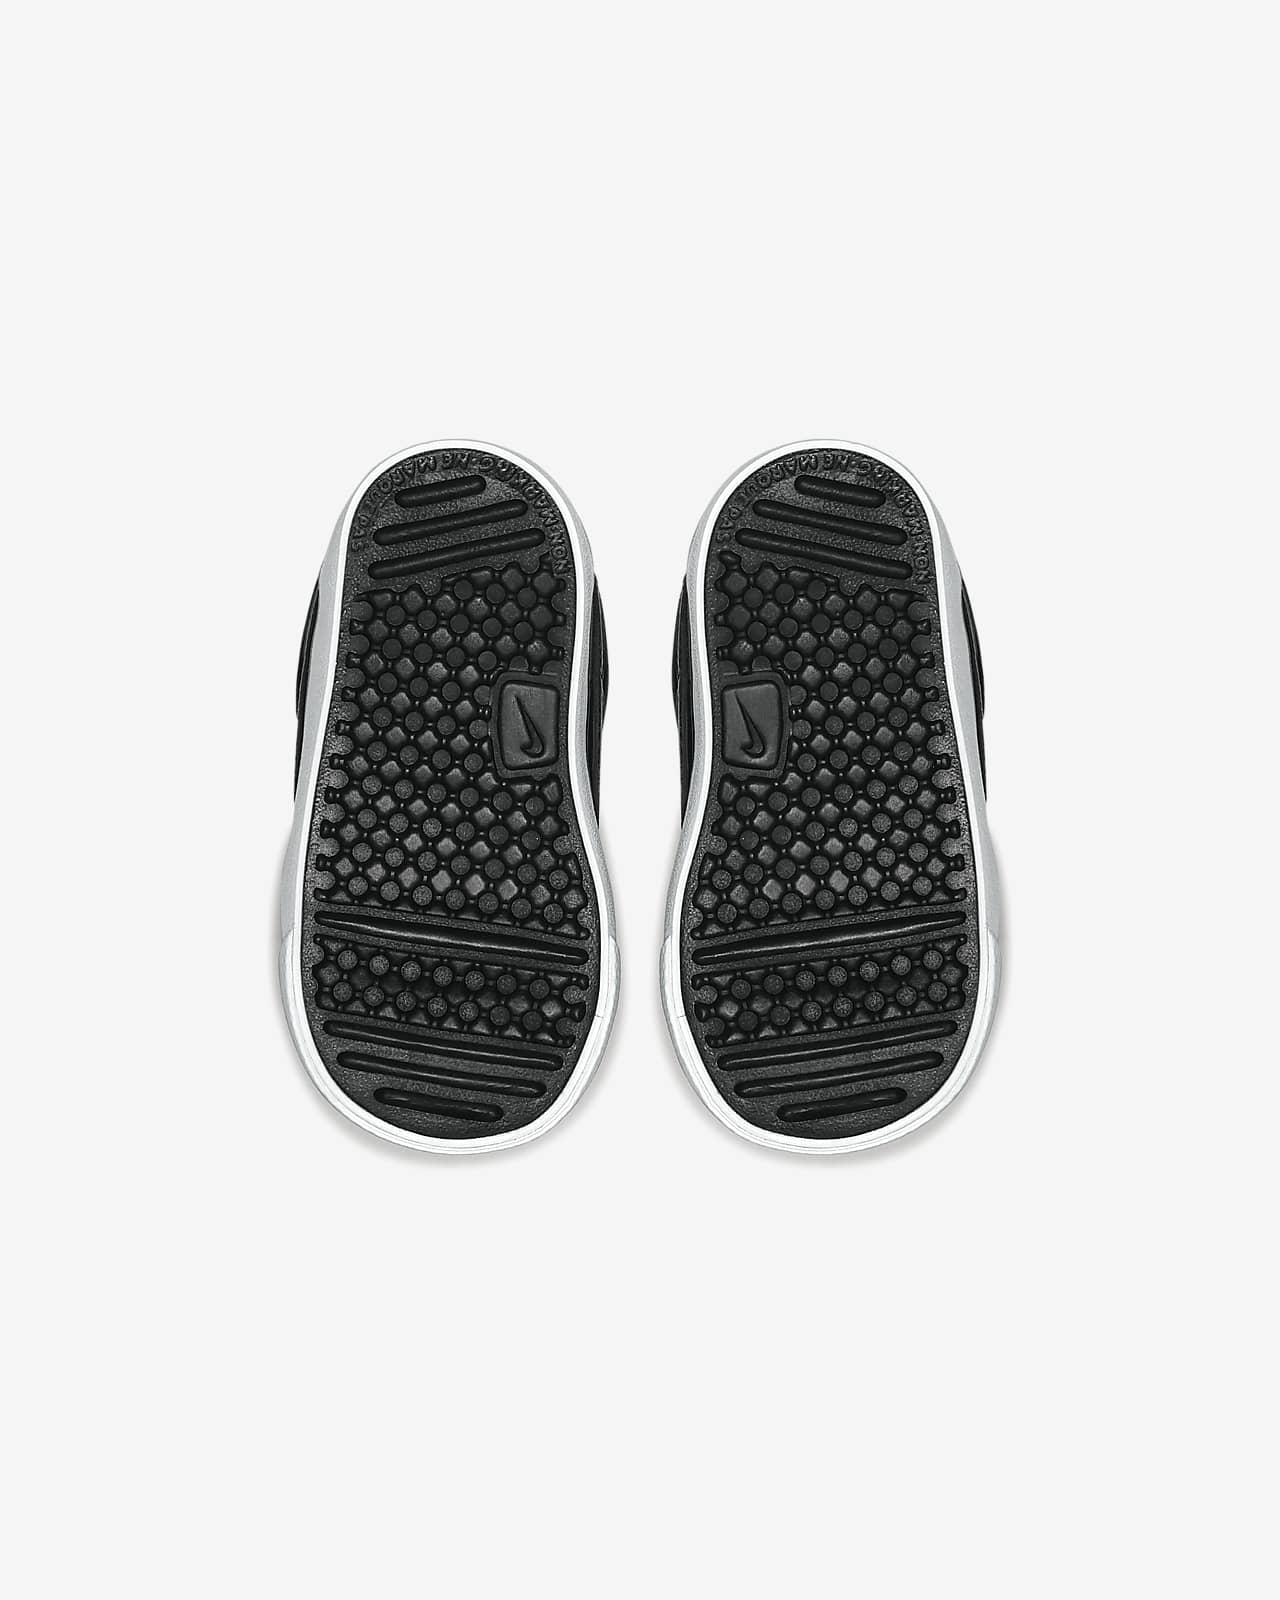 Nike Capri 3 LTR Baby/Toddler Shoe 